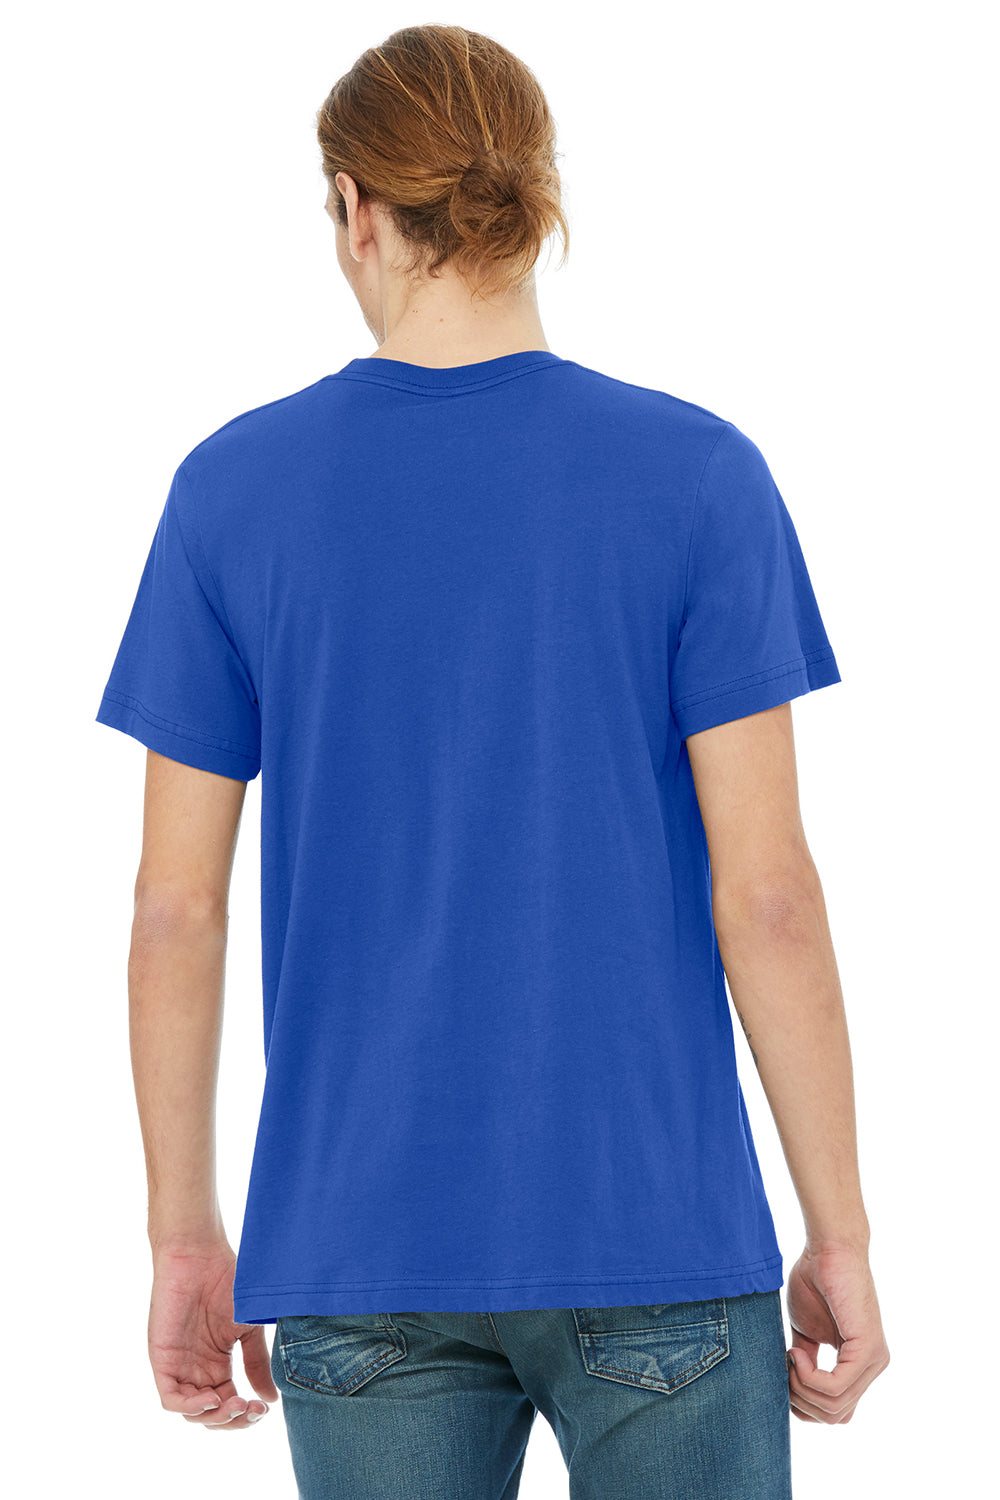 Bella + Canvas 3021 Mens Jersey Short Sleeve Crewneck T-Shirt w/ Pocket Royal Blue Back